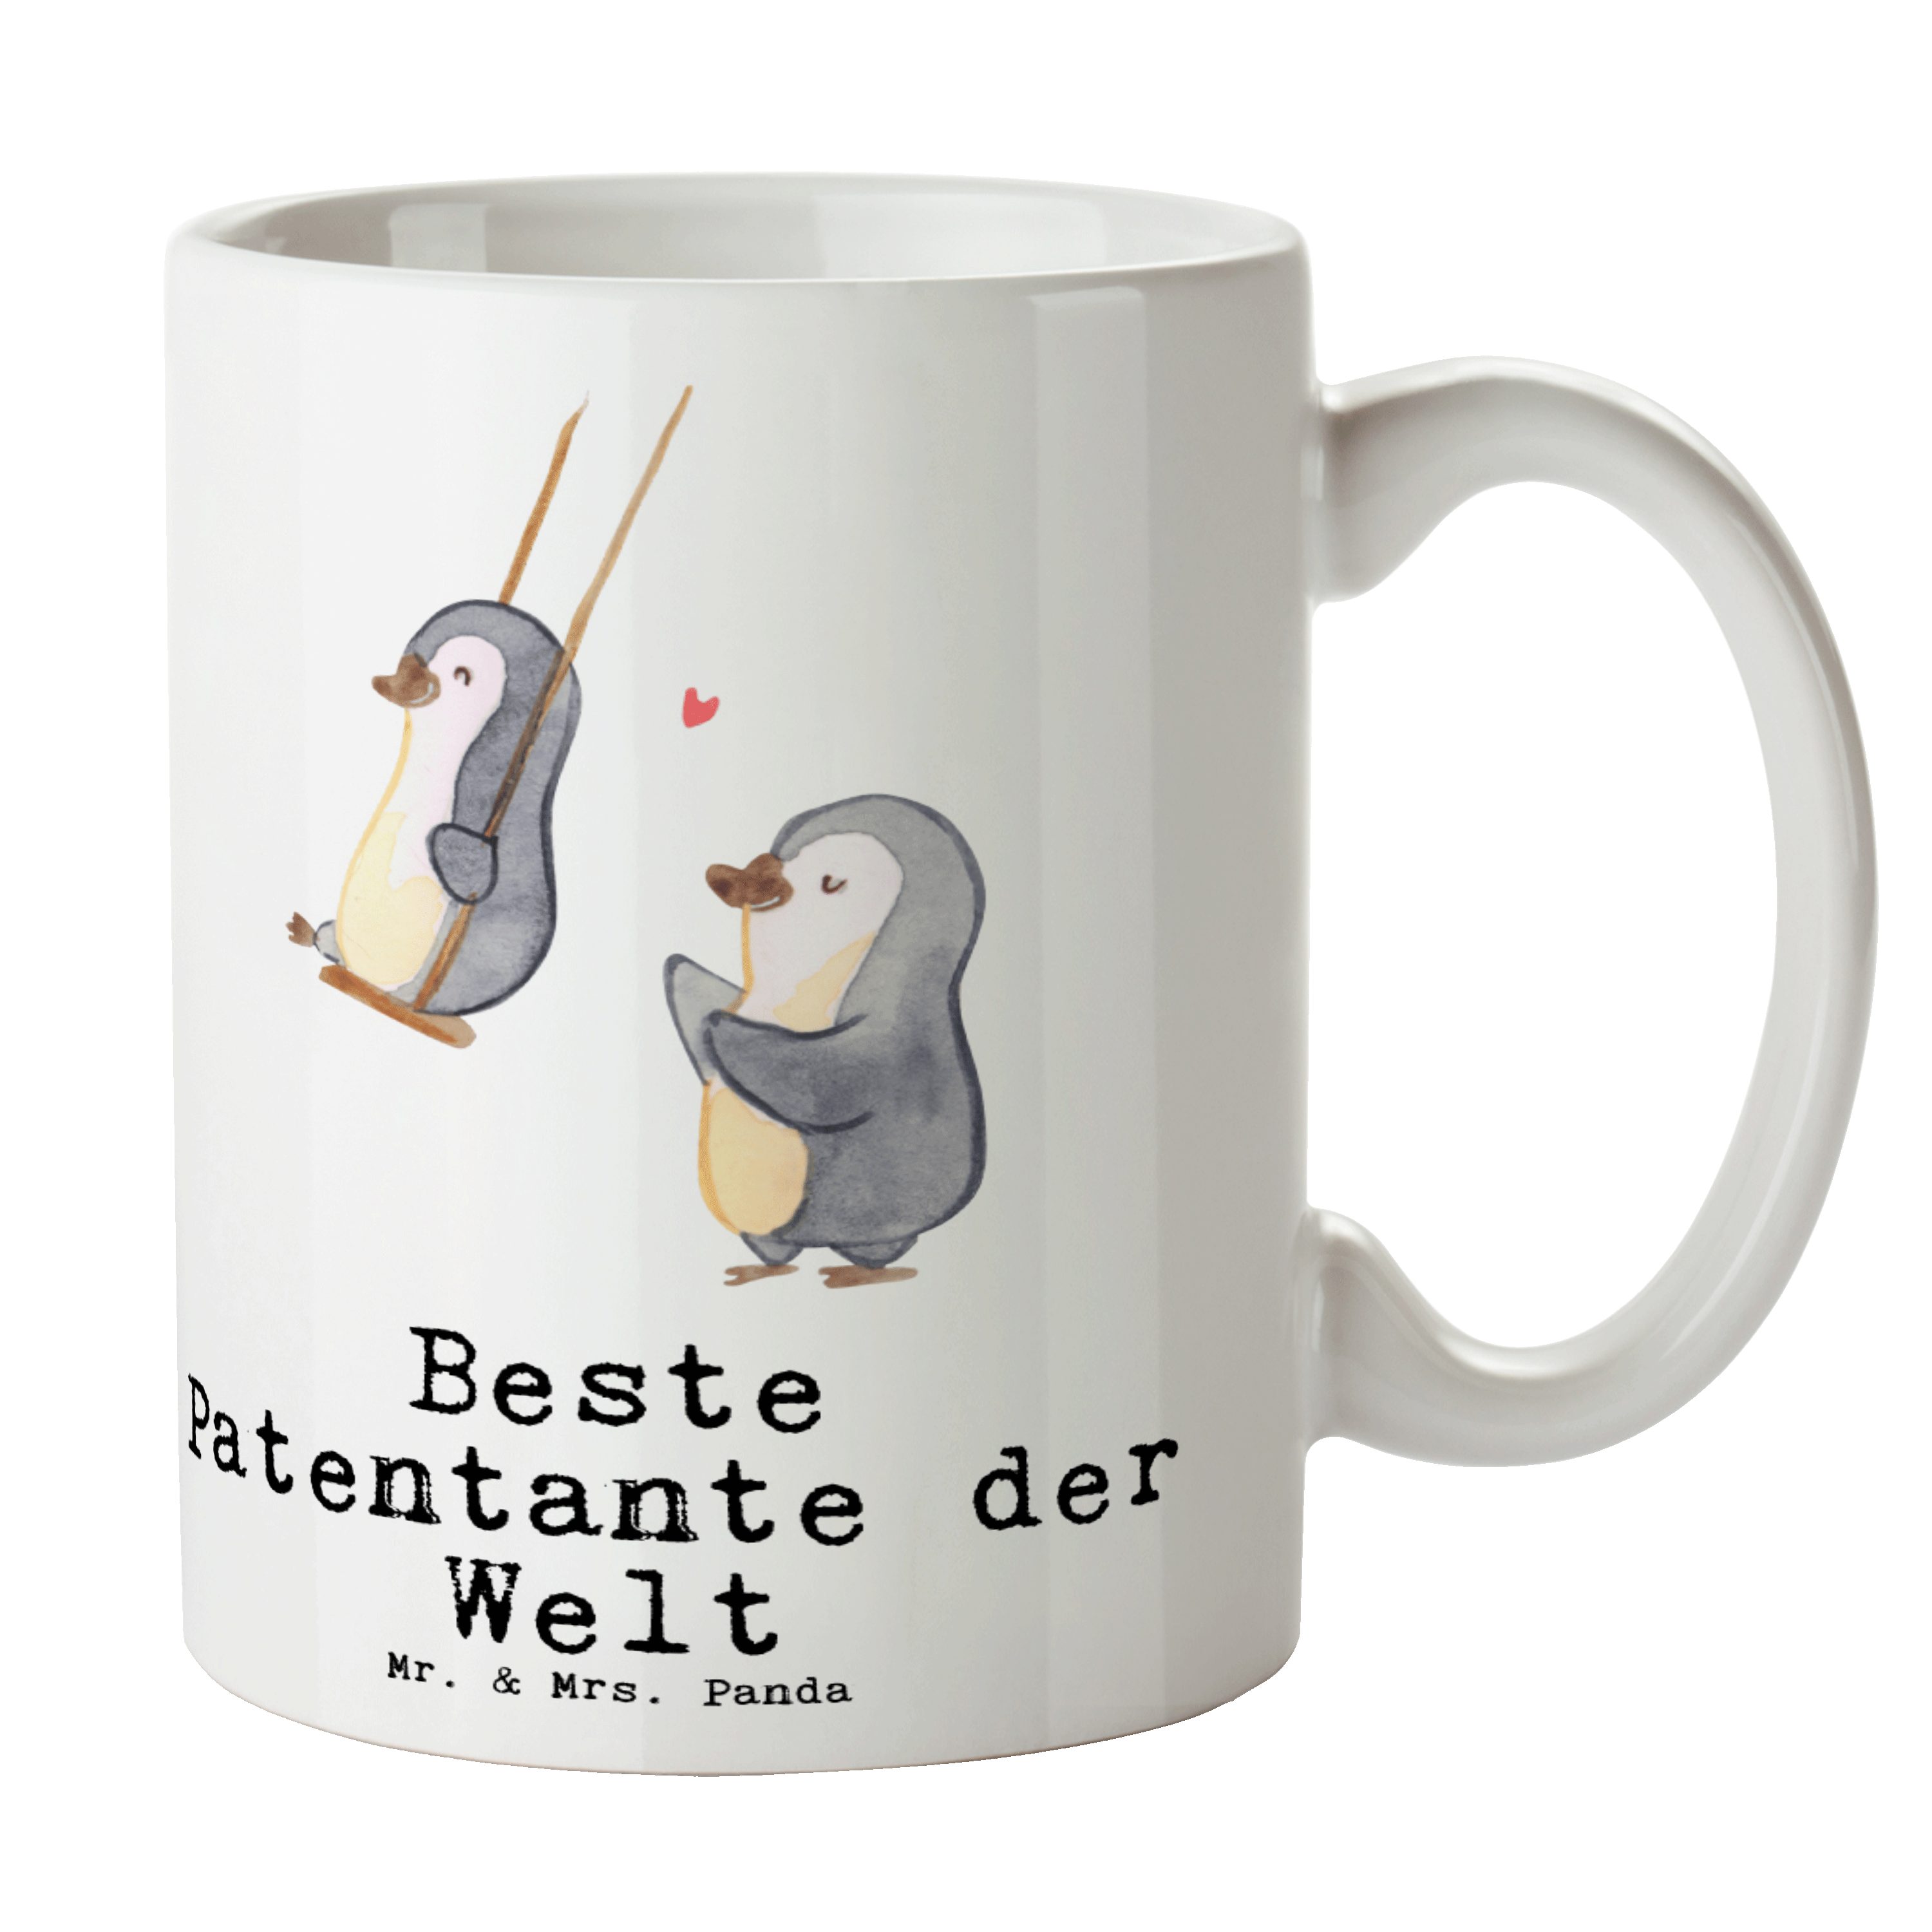 Mr. & Mrs. Panda Tasse Pinguin Beste Patentante der Welt - Weiß - Geschenk, Dankeschön, Becher, Paten Tante, Kaffeetasse, Taufpartner, Büro, Mitbringsel, Tee, Kaffeebecher, Keramik